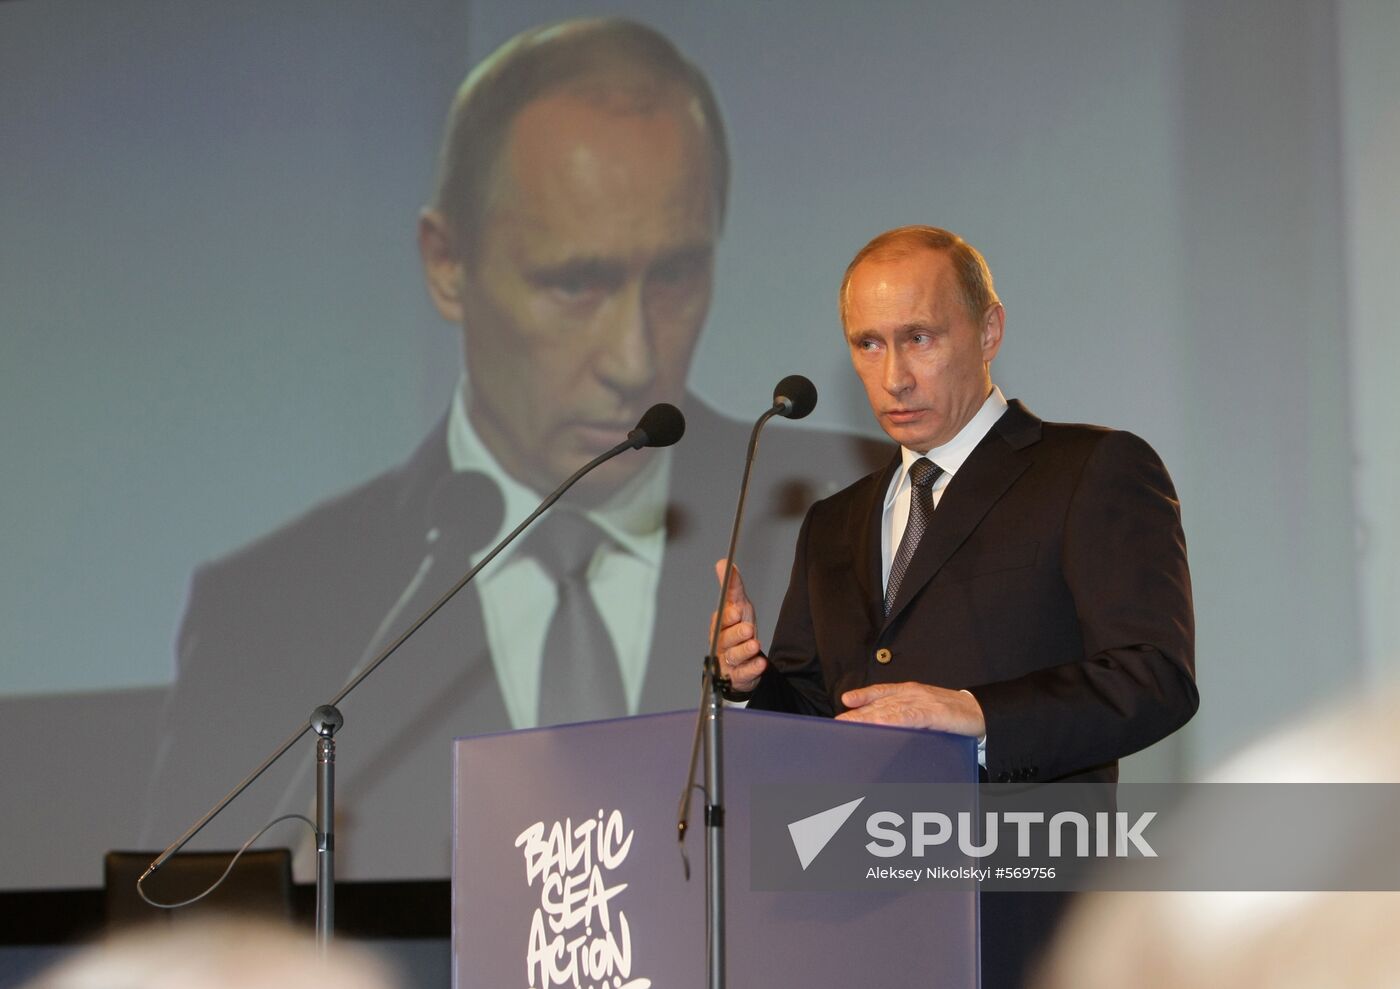 Vladimir Putin speaks at Baltic Sea Action Summit 2010